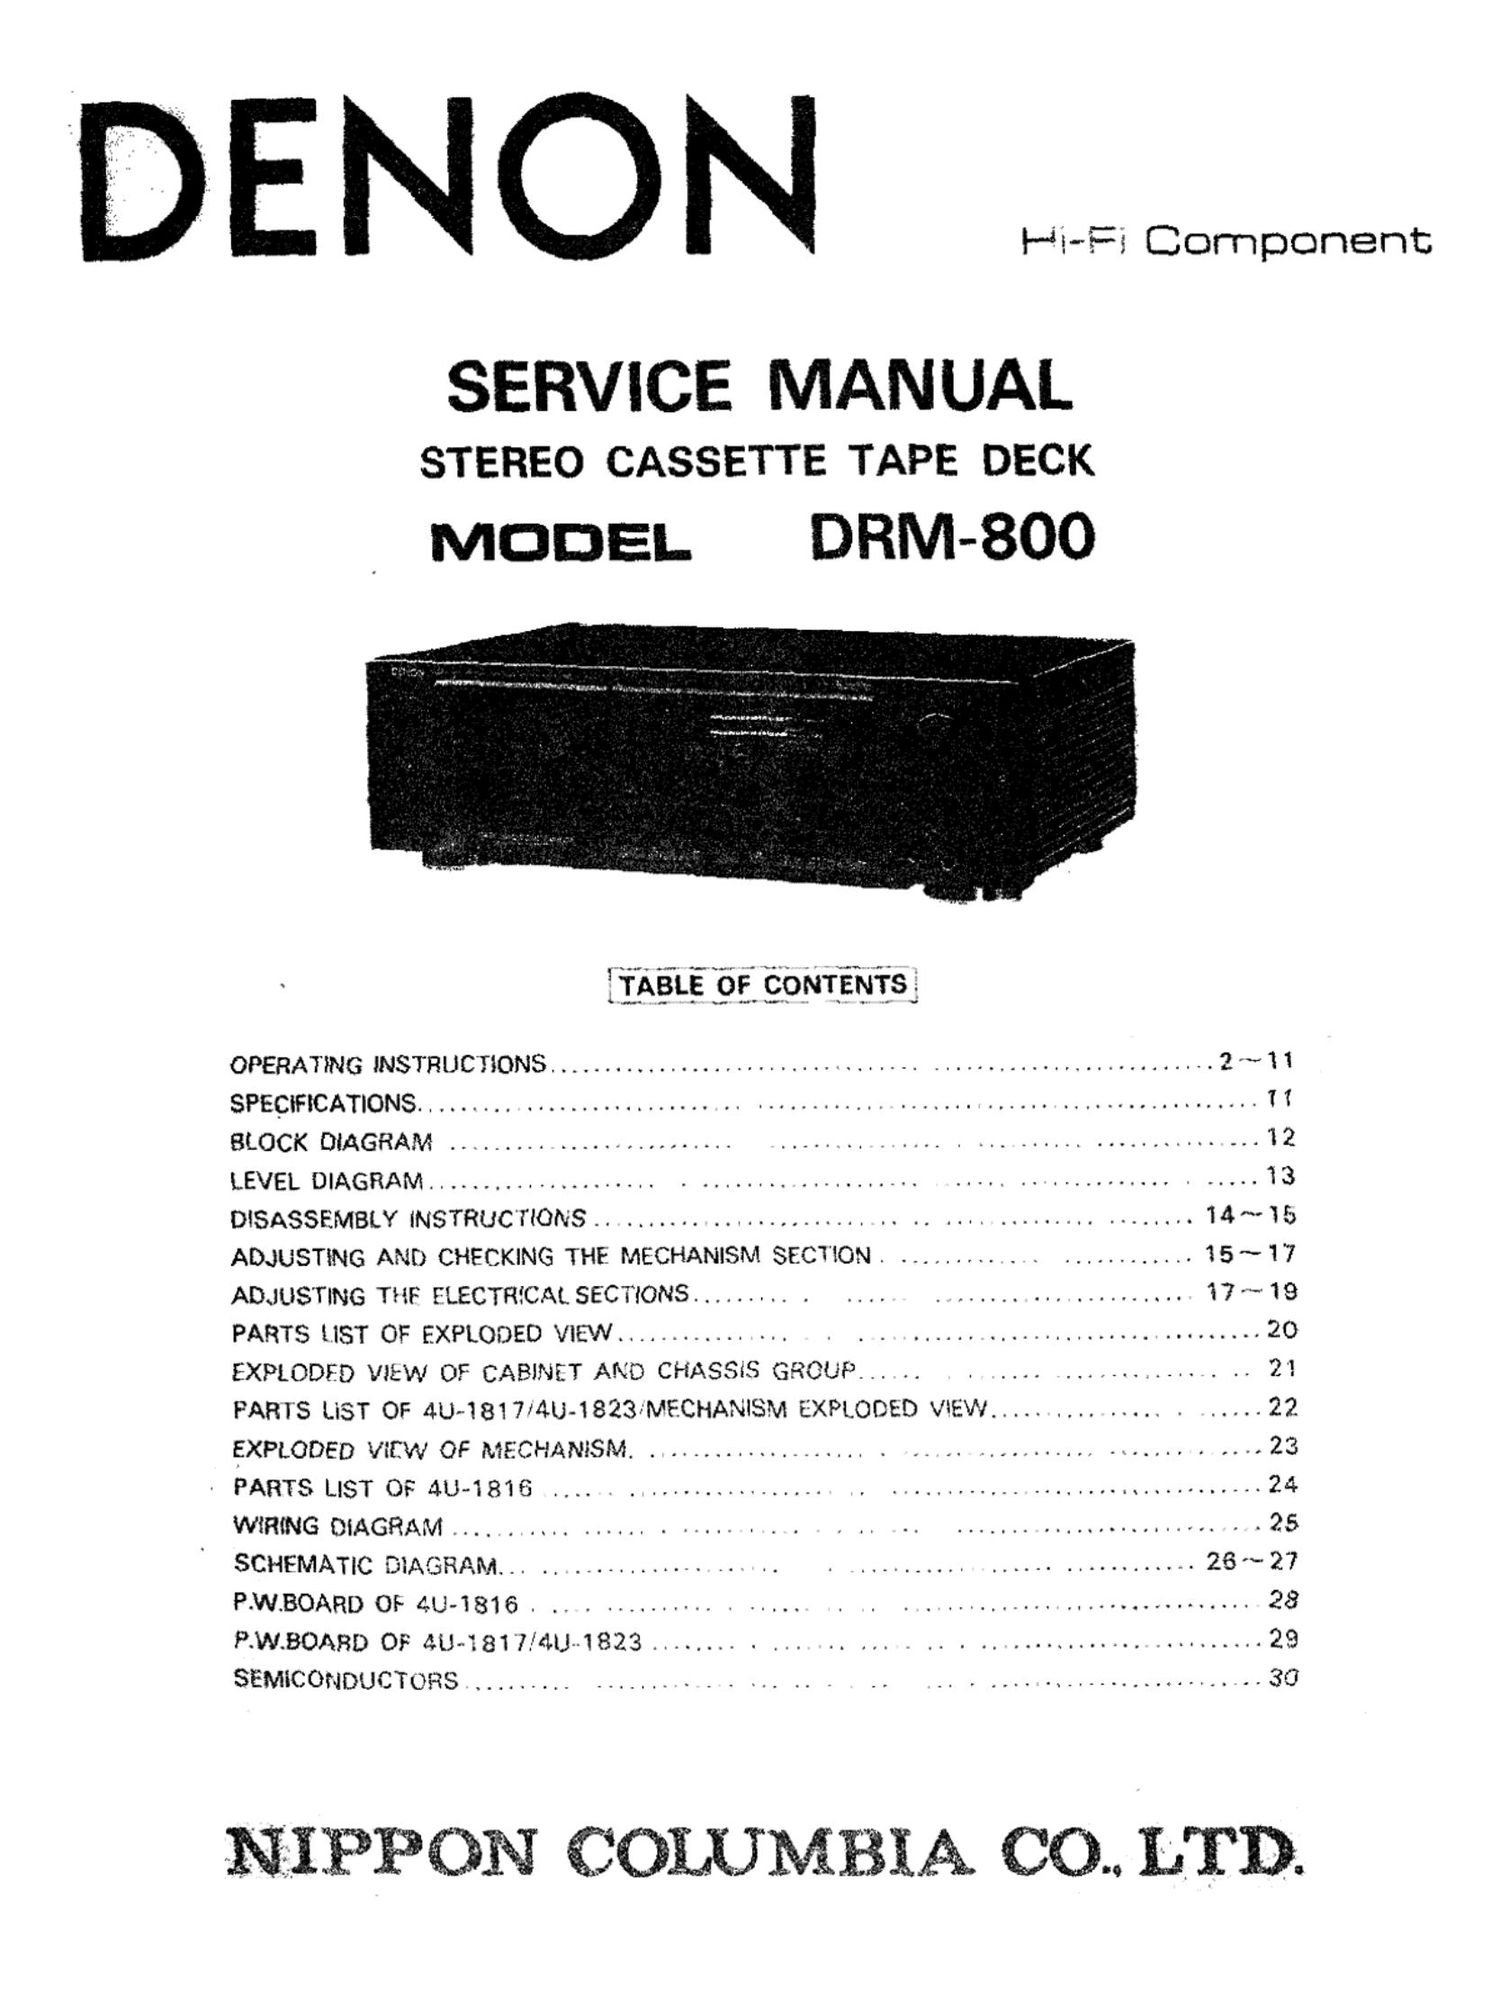 Denon DRM 800 Service Manual